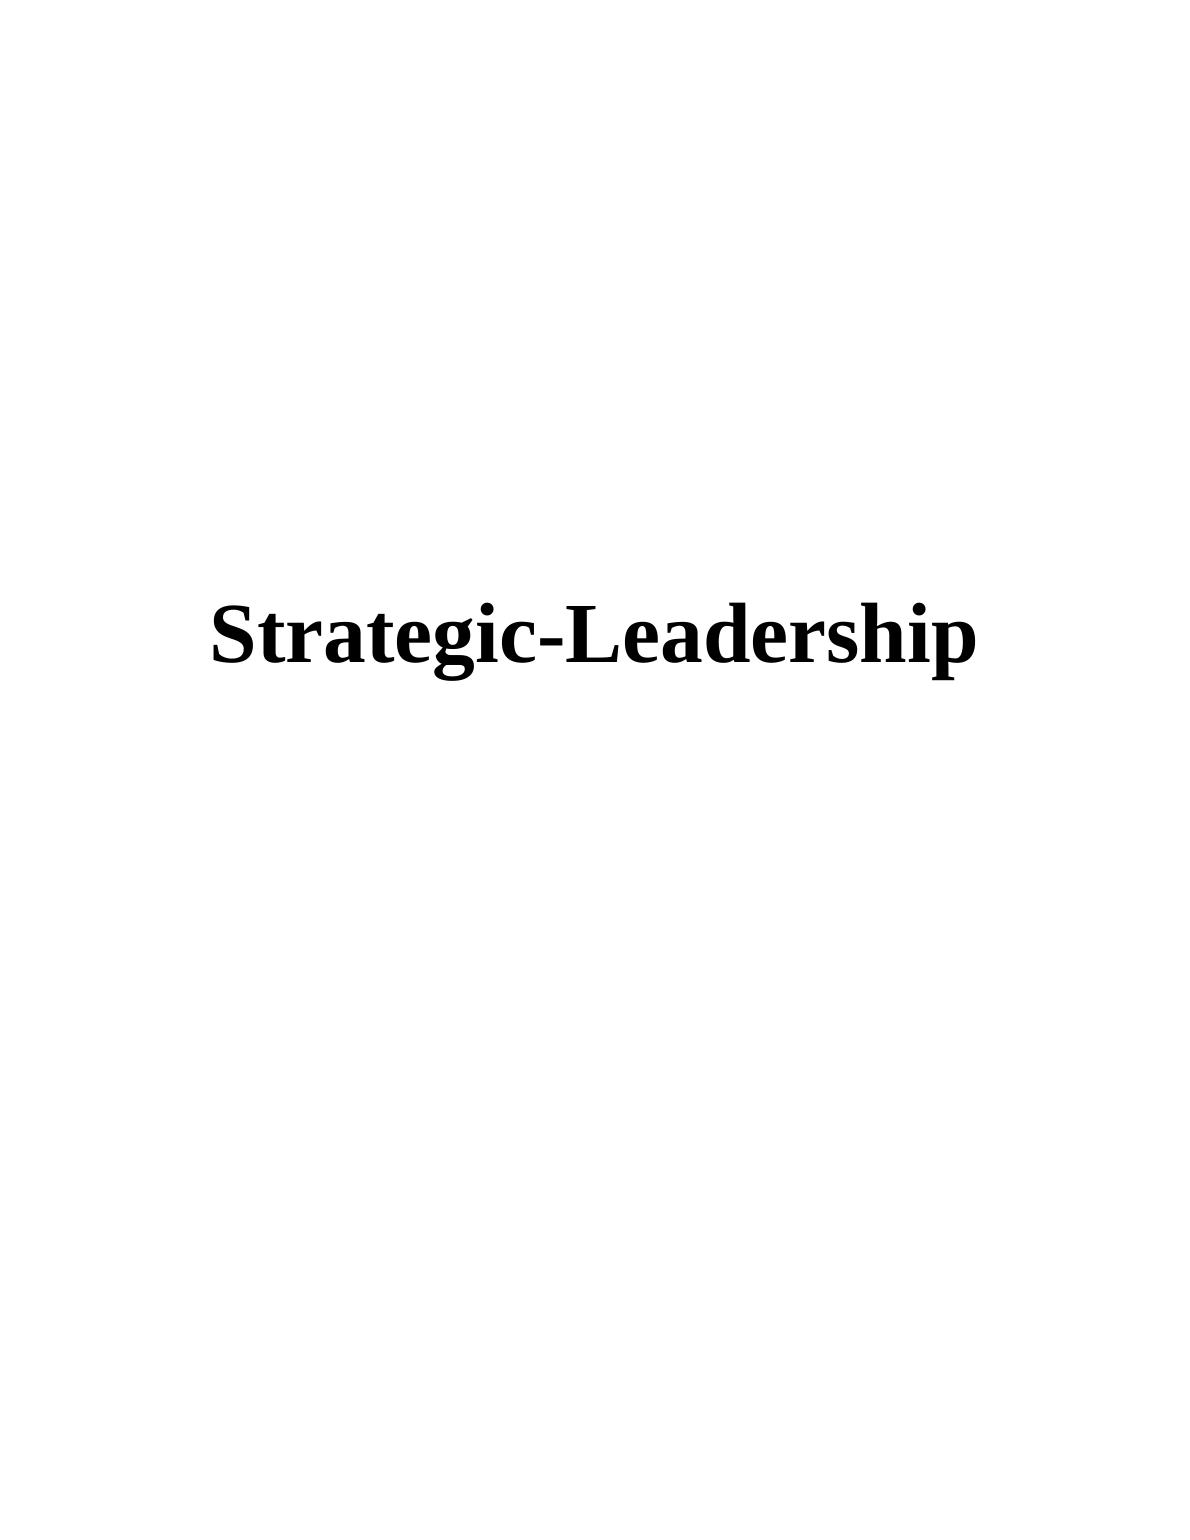 Strategic-Leadership Report on Hilton Hotel_1